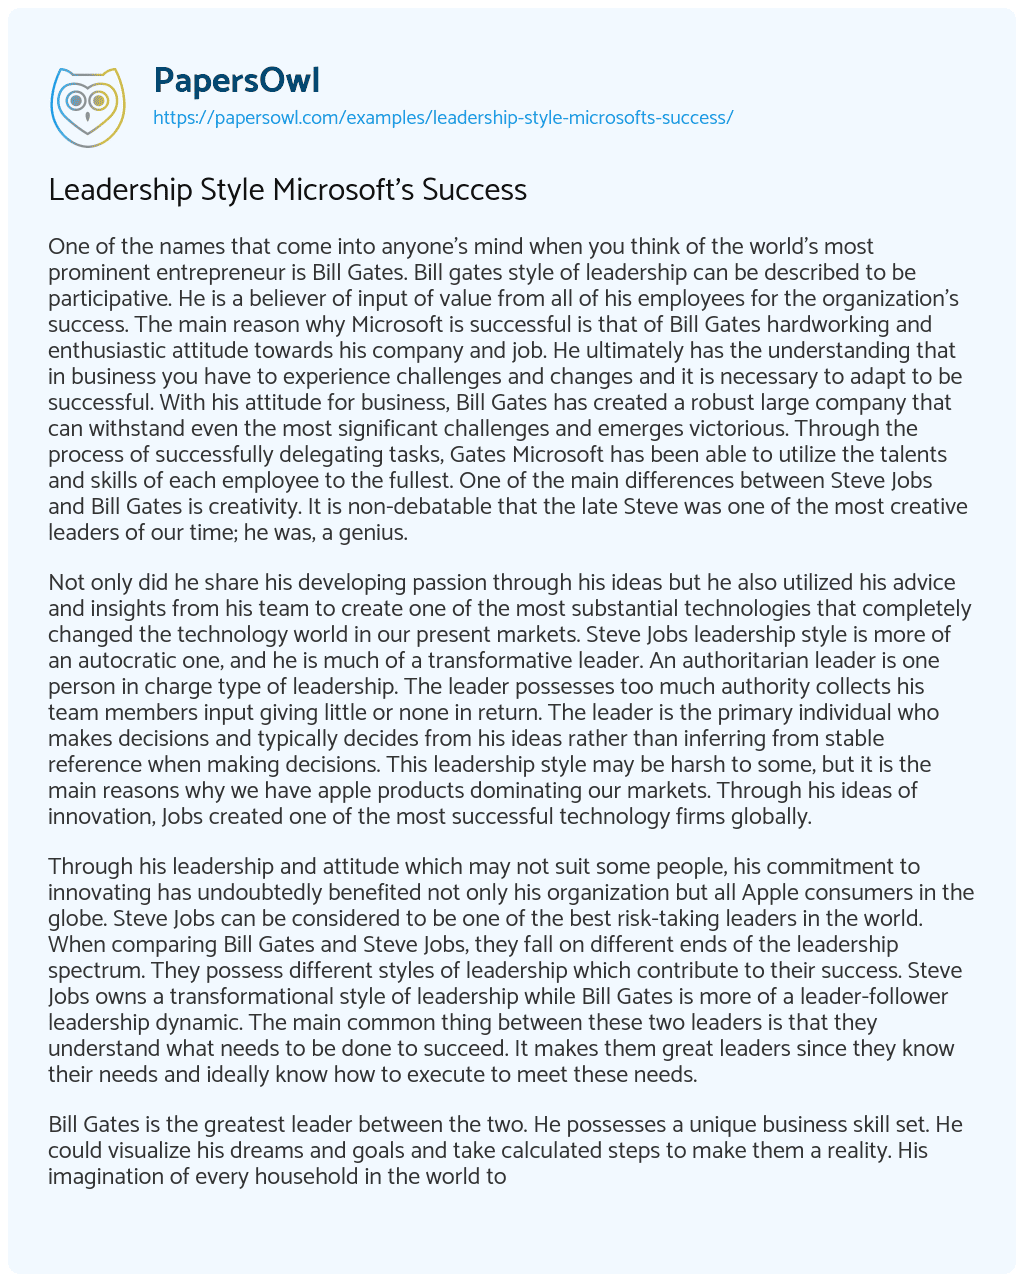 Essay on Leadership Style Microsoft’s Success